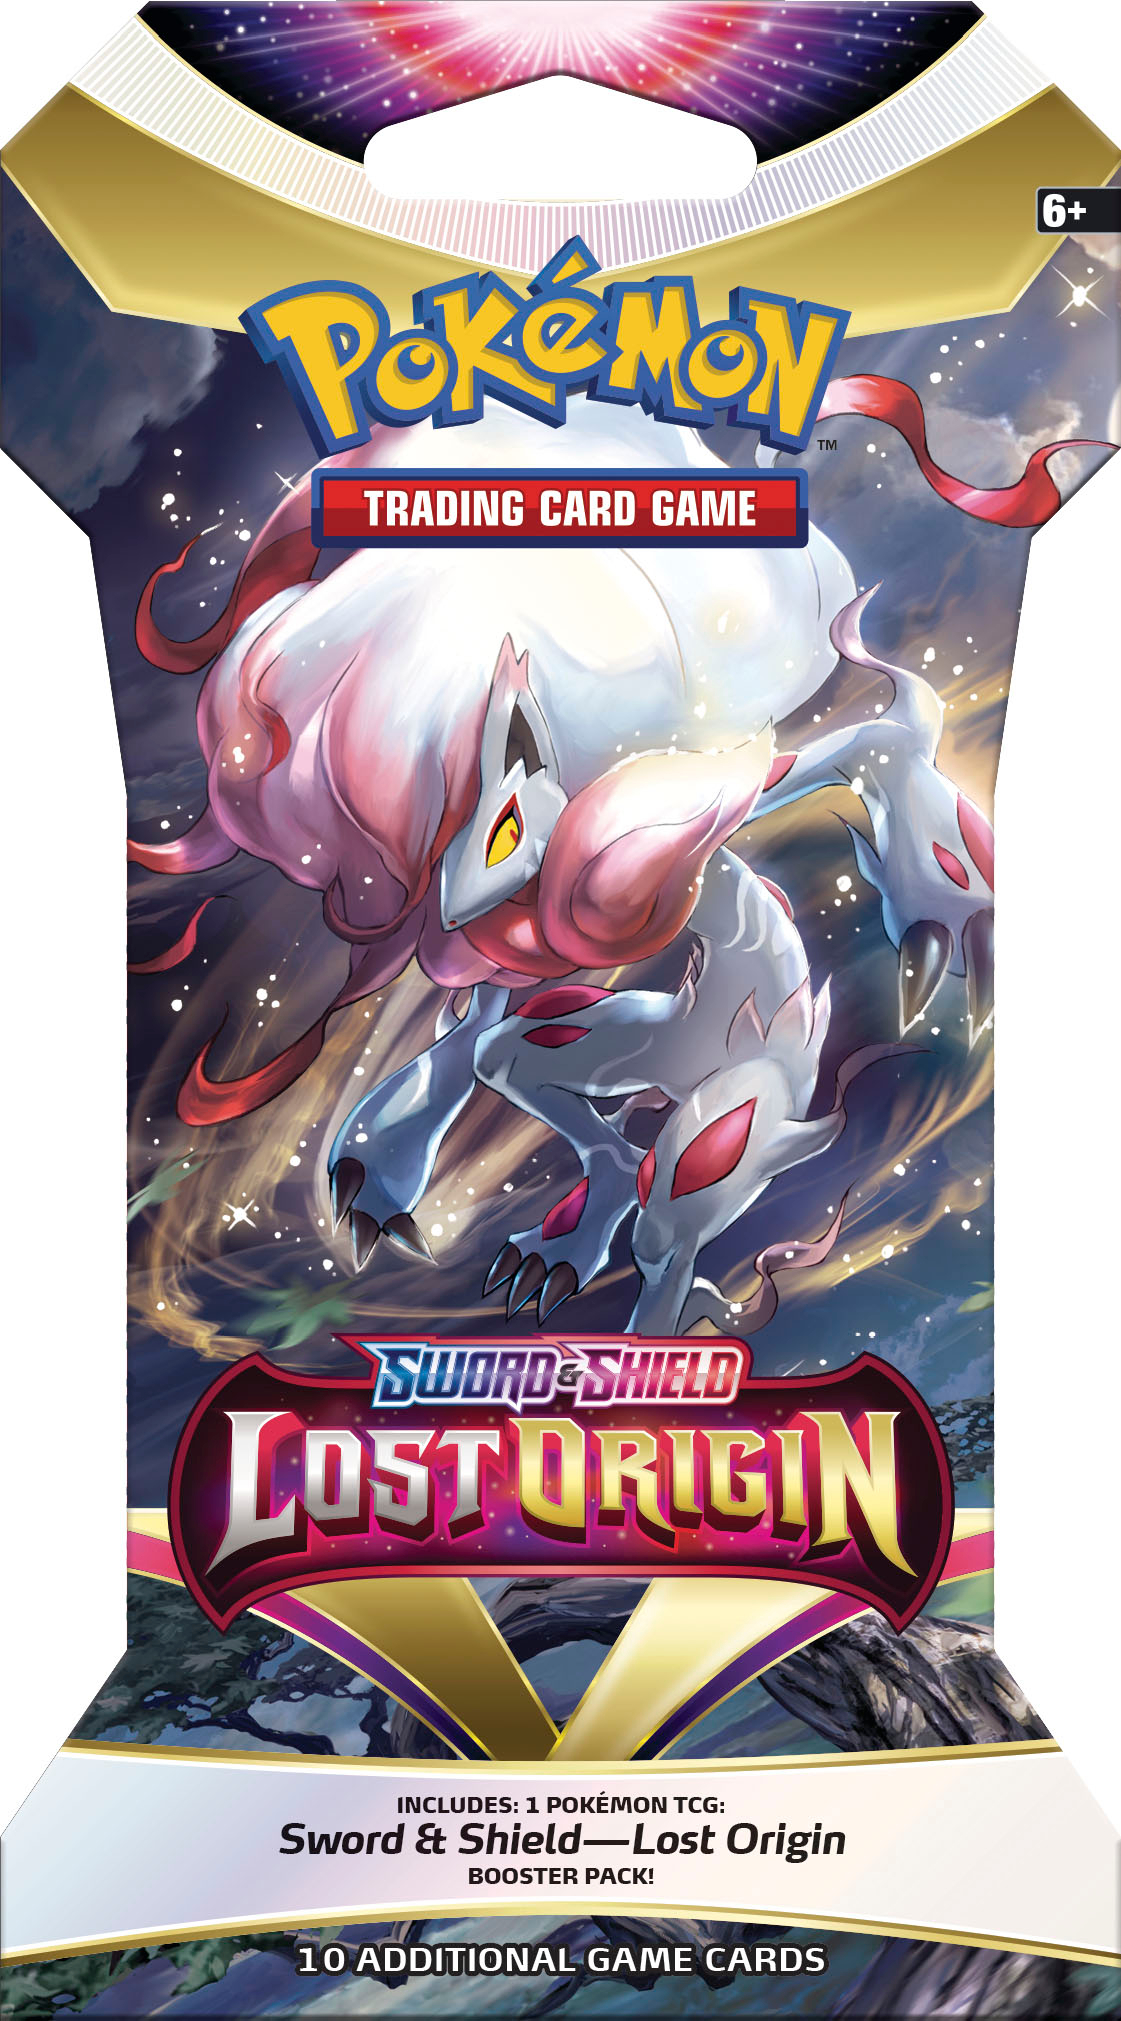 Best Buy: Pokémon Trading Card Game: Evolving Skies 3-Pack Booster 178-82881